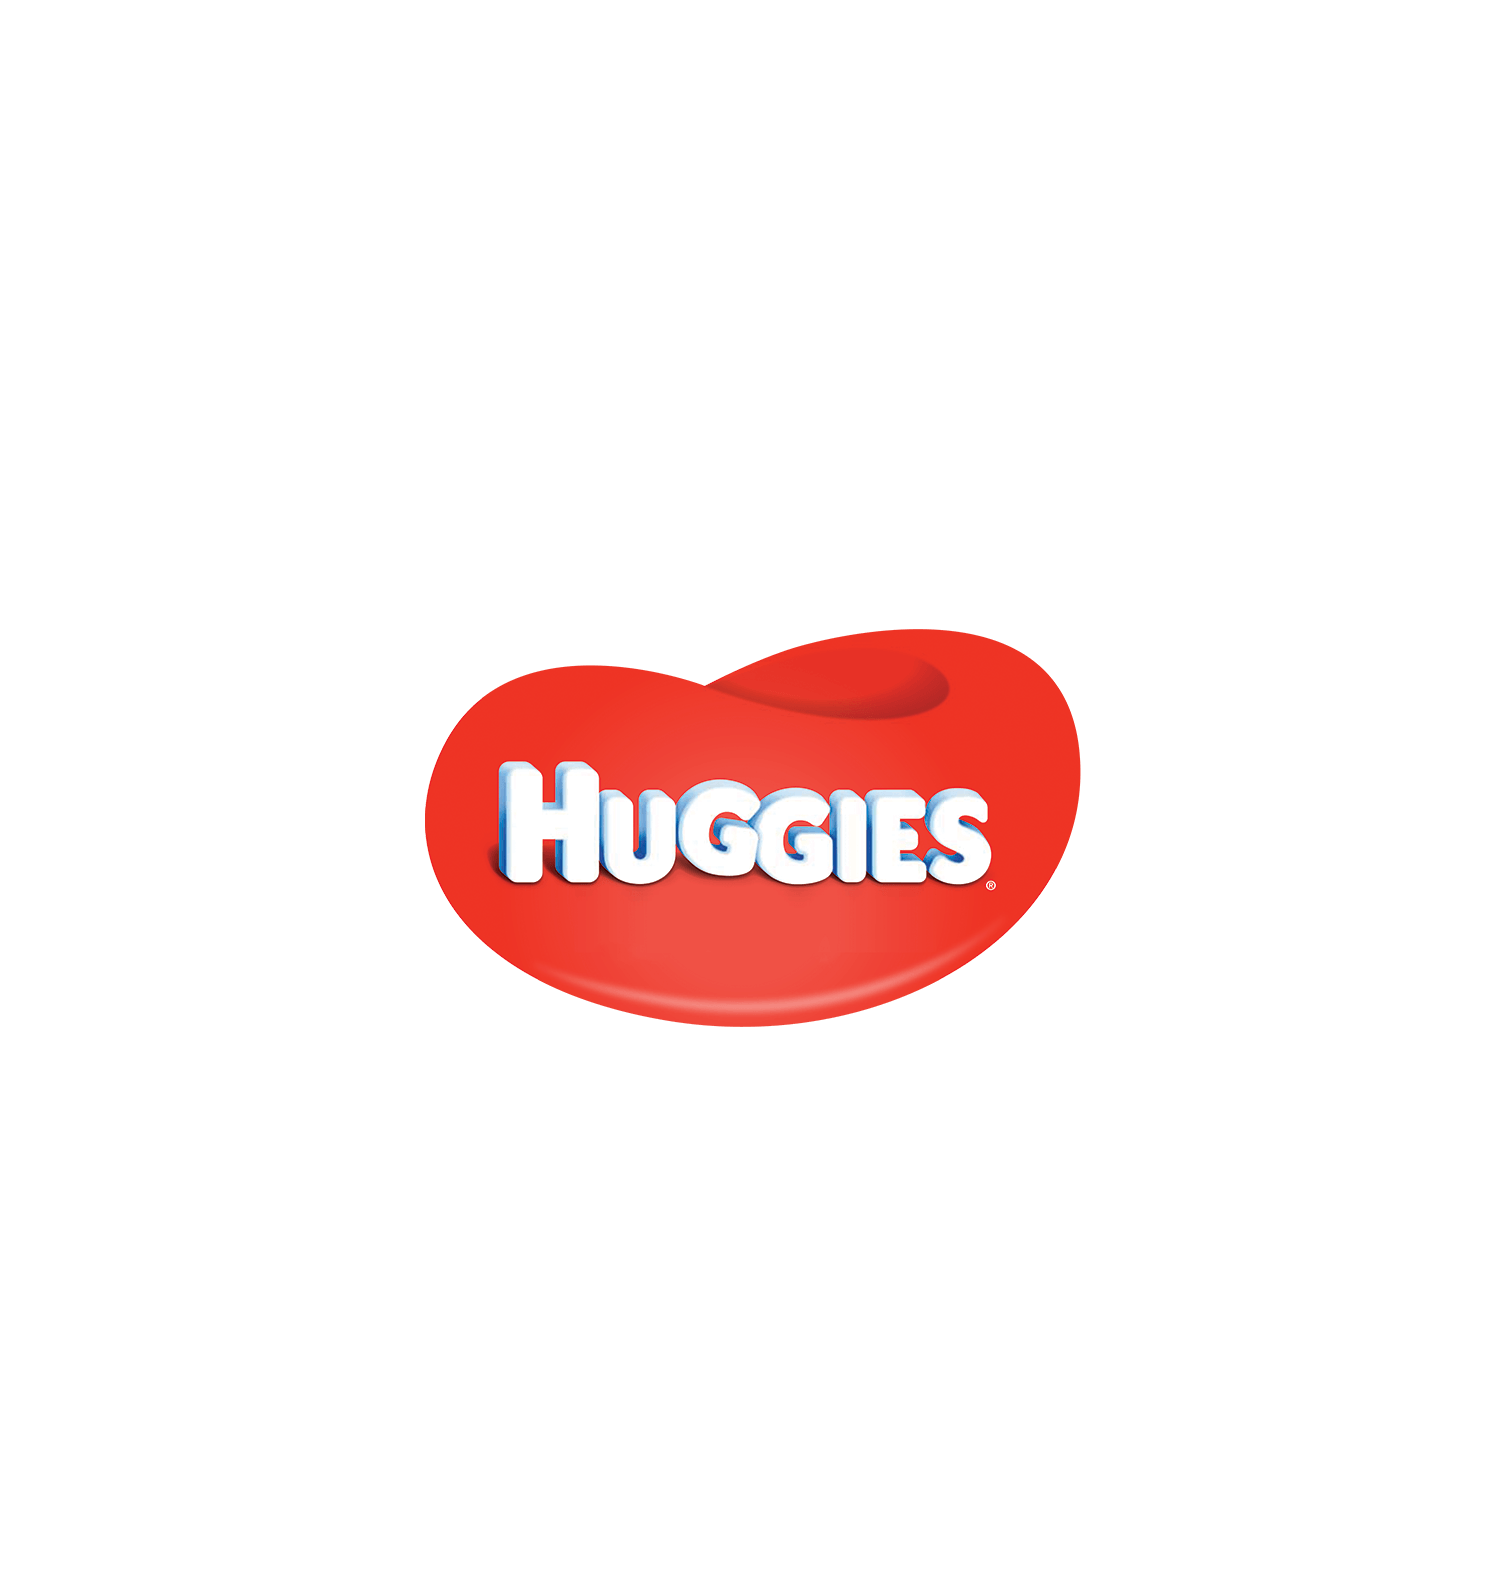 Huggies Logo - logo huggies png - AbeonCliparts | Cliparts & Vectors for free 2019